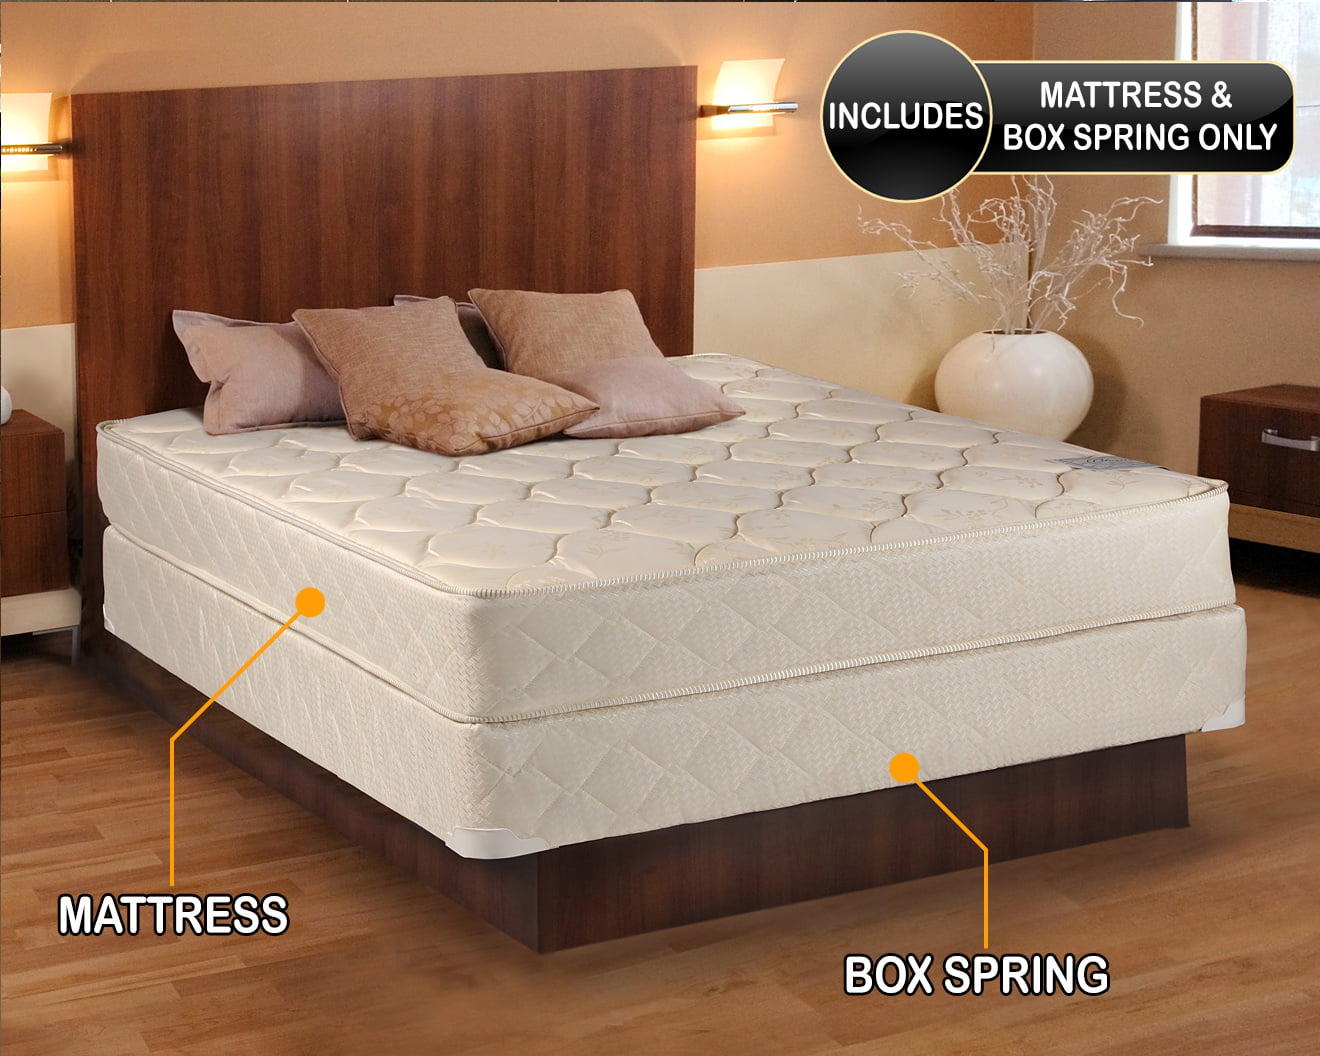 sized mattress 60 x80